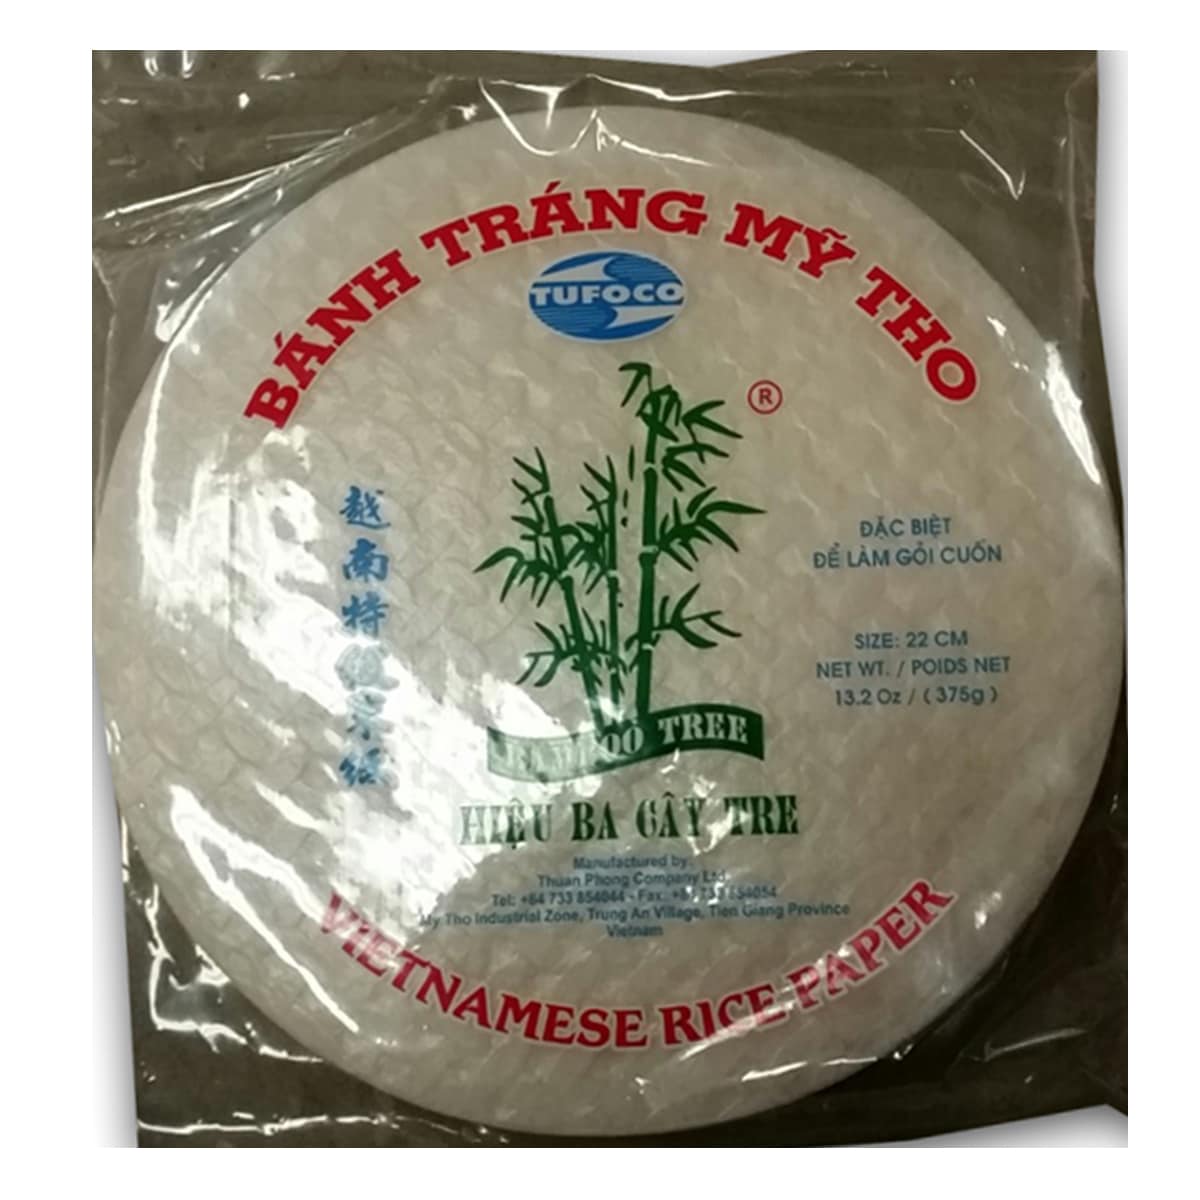 Buy Tufoco Vietanmese Rice Paper 22cm - 375 gm